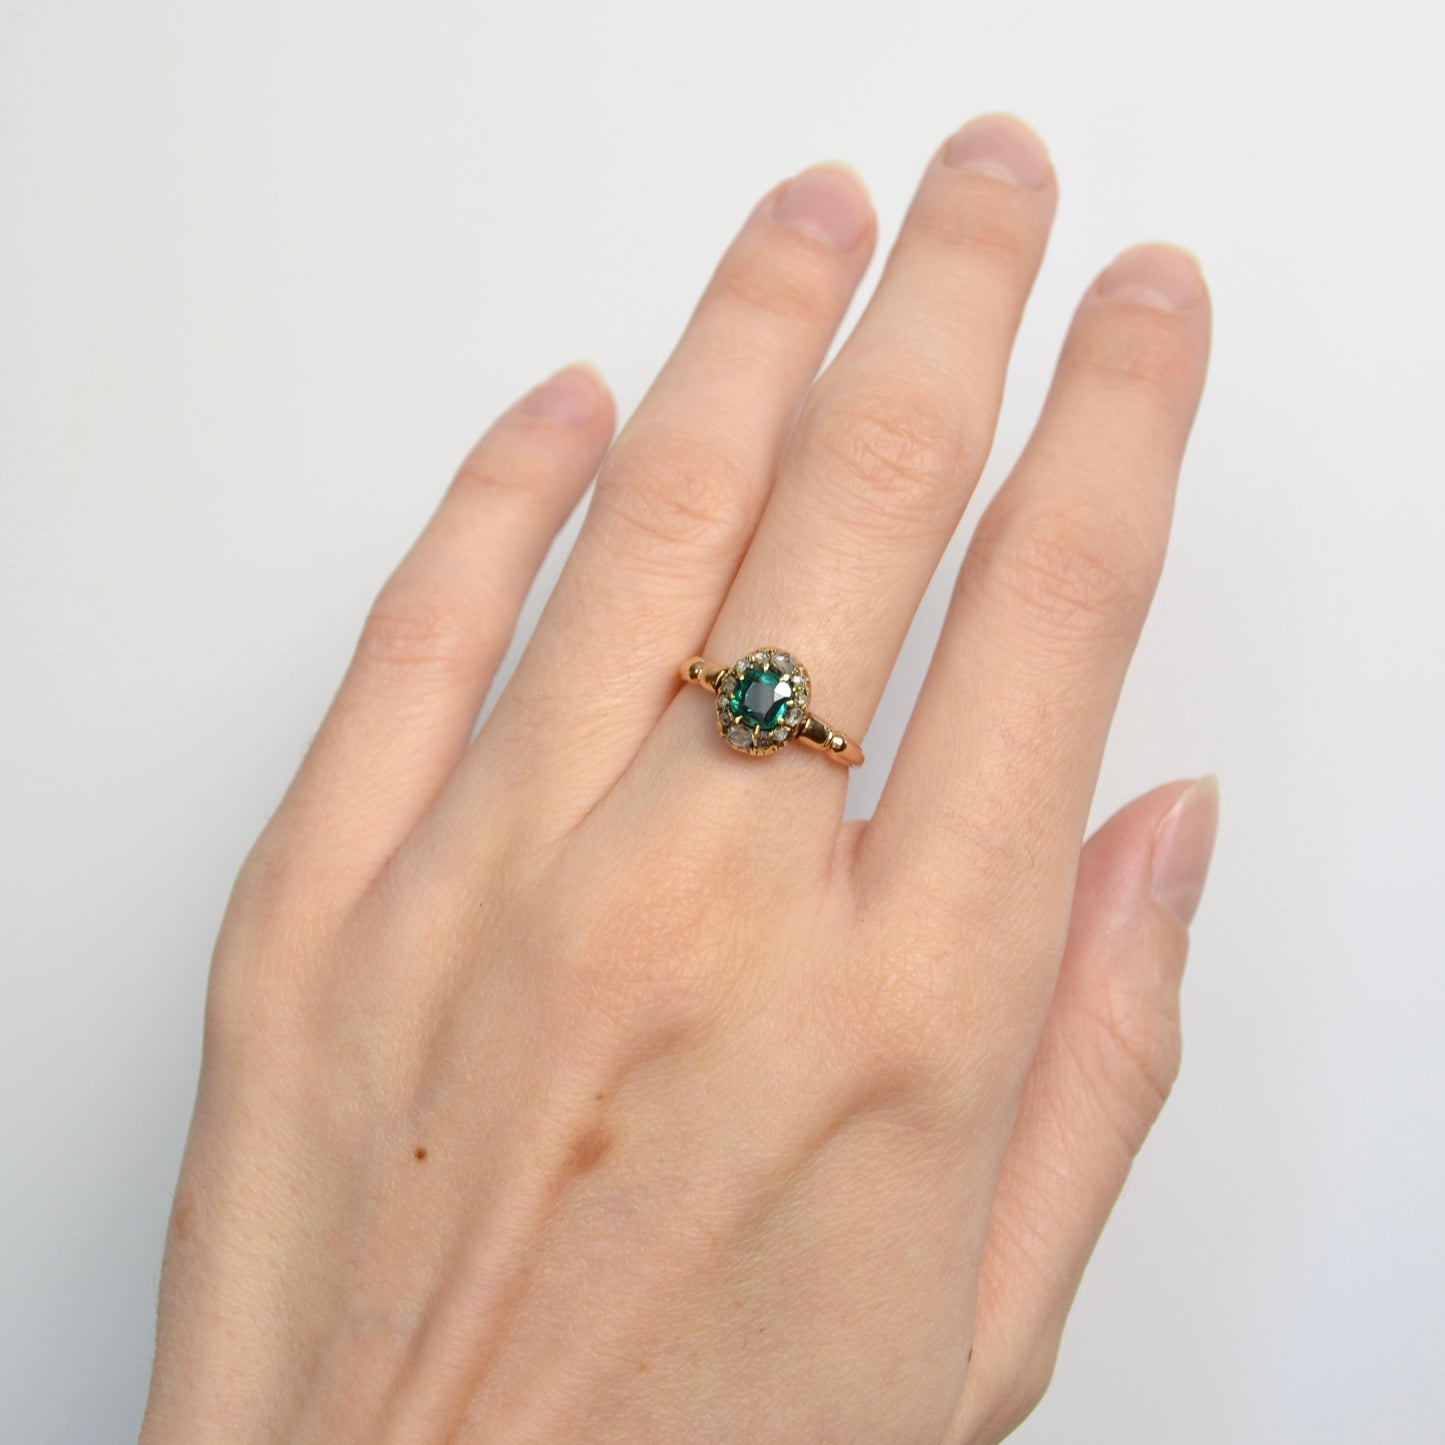 Antique Green Tourmaline and Diamond Ring